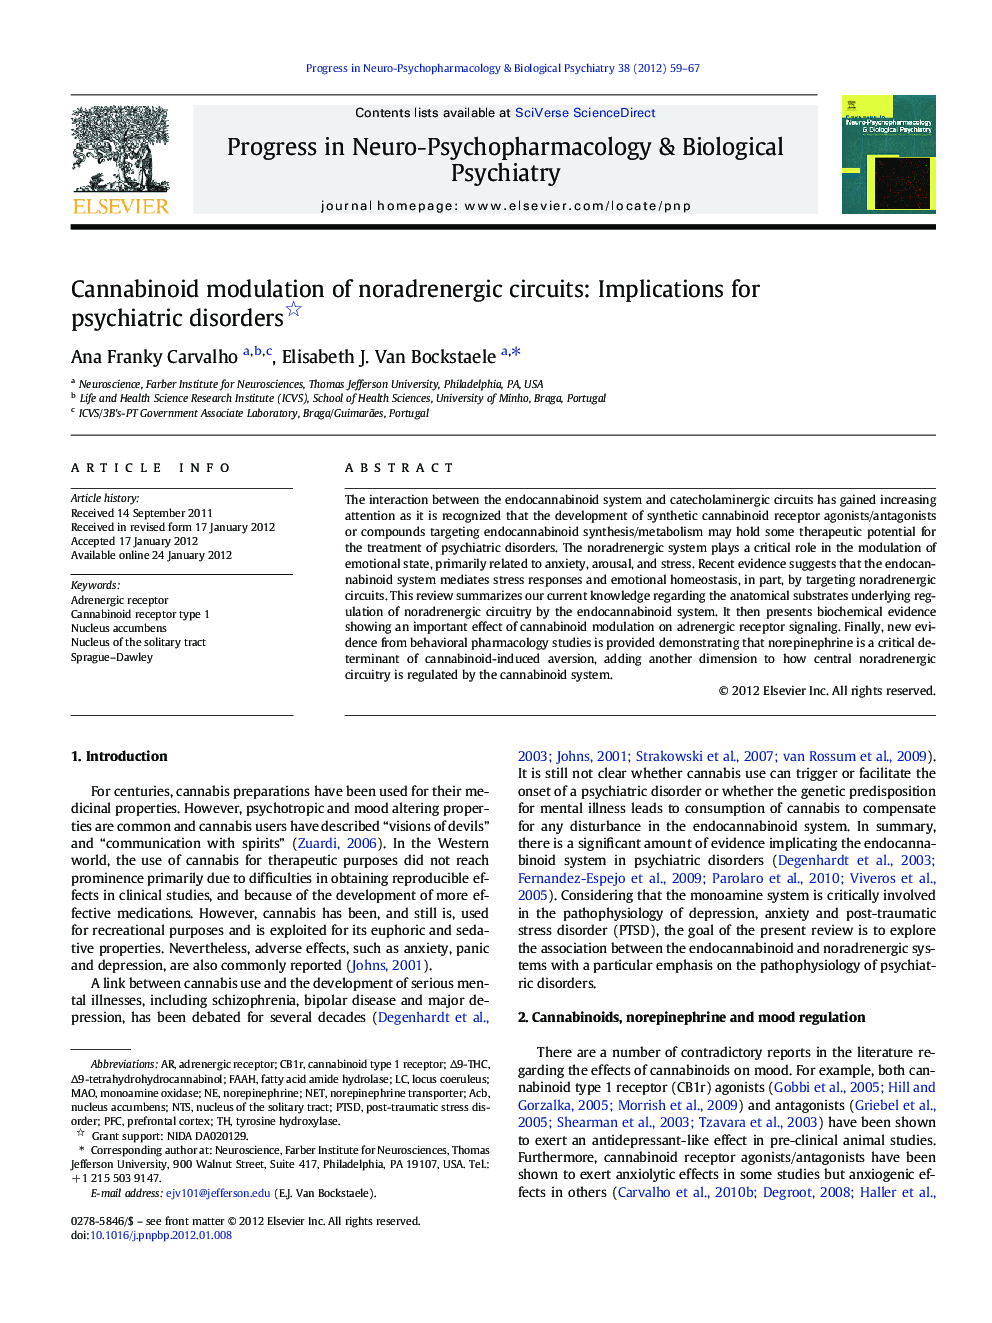 Cannabinoid modulation of noradrenergic circuits: Implications for psychiatric disorders 